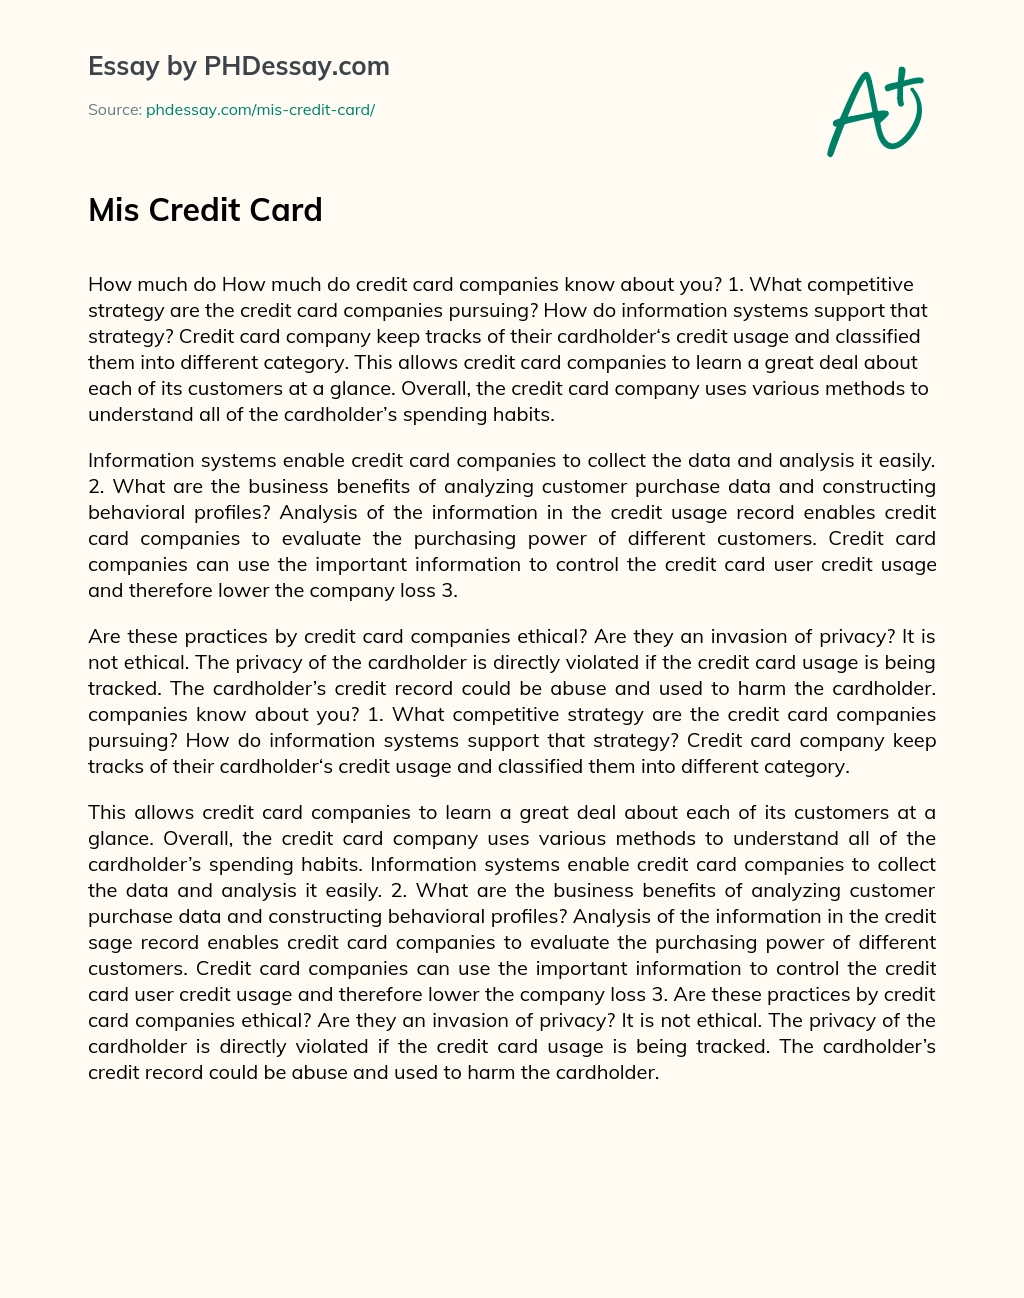 Mis Credit Card essay